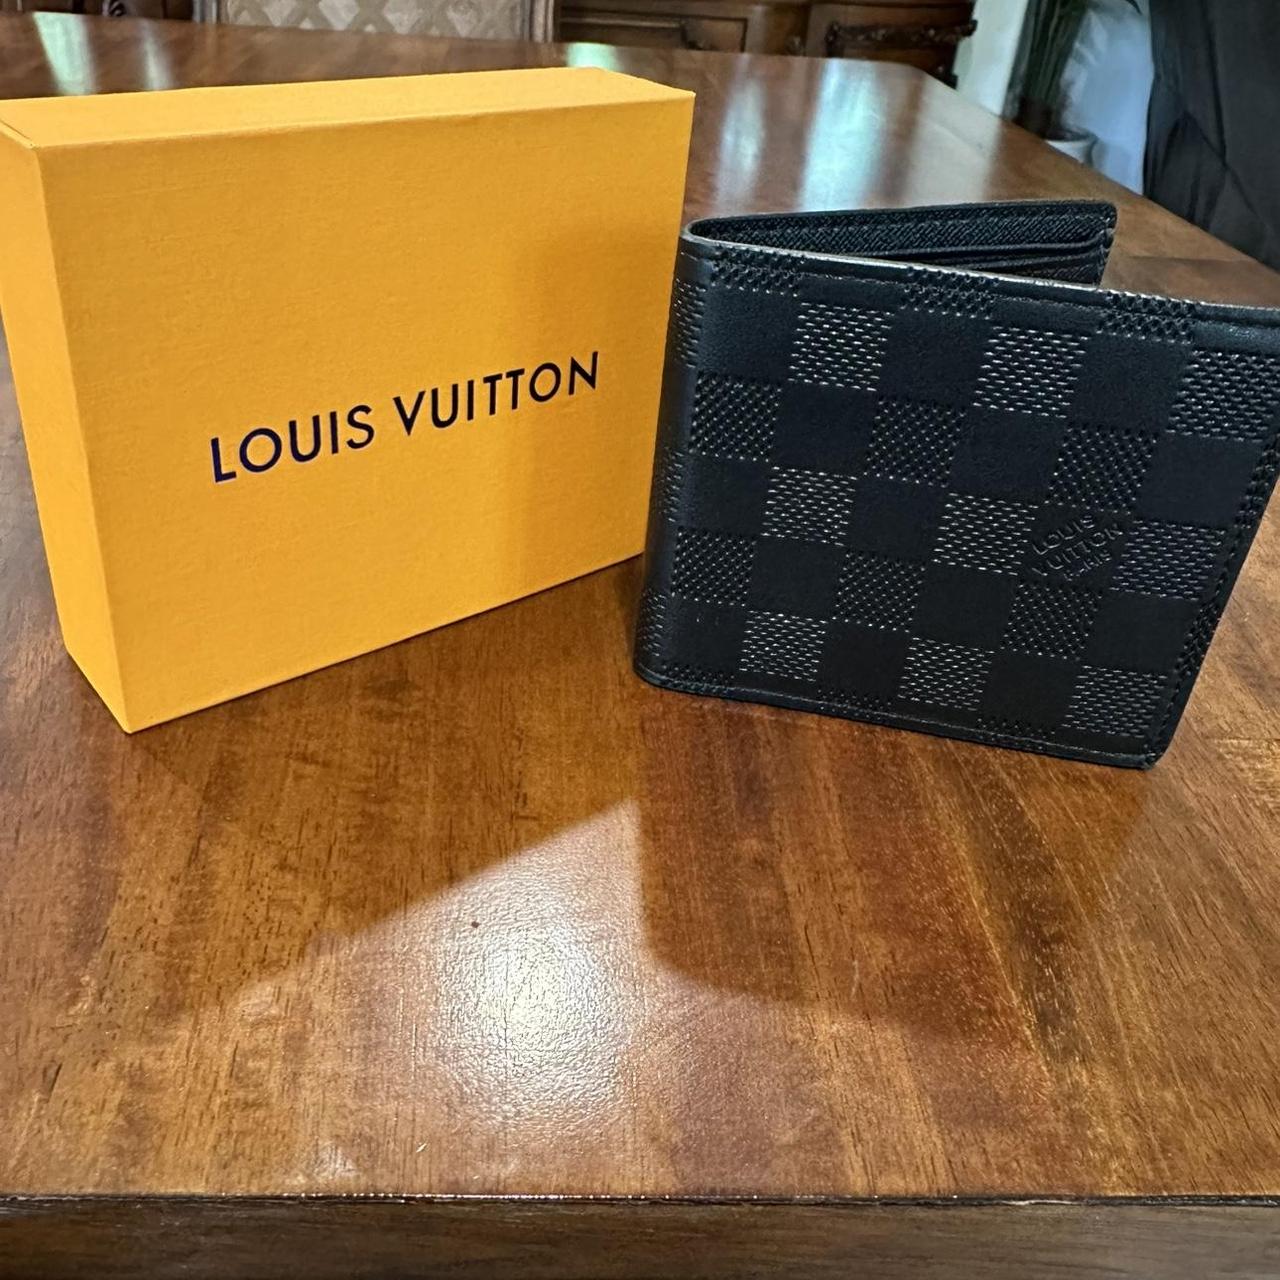 Louis Vuitton Wallet, rainbow edition cannot be - Depop